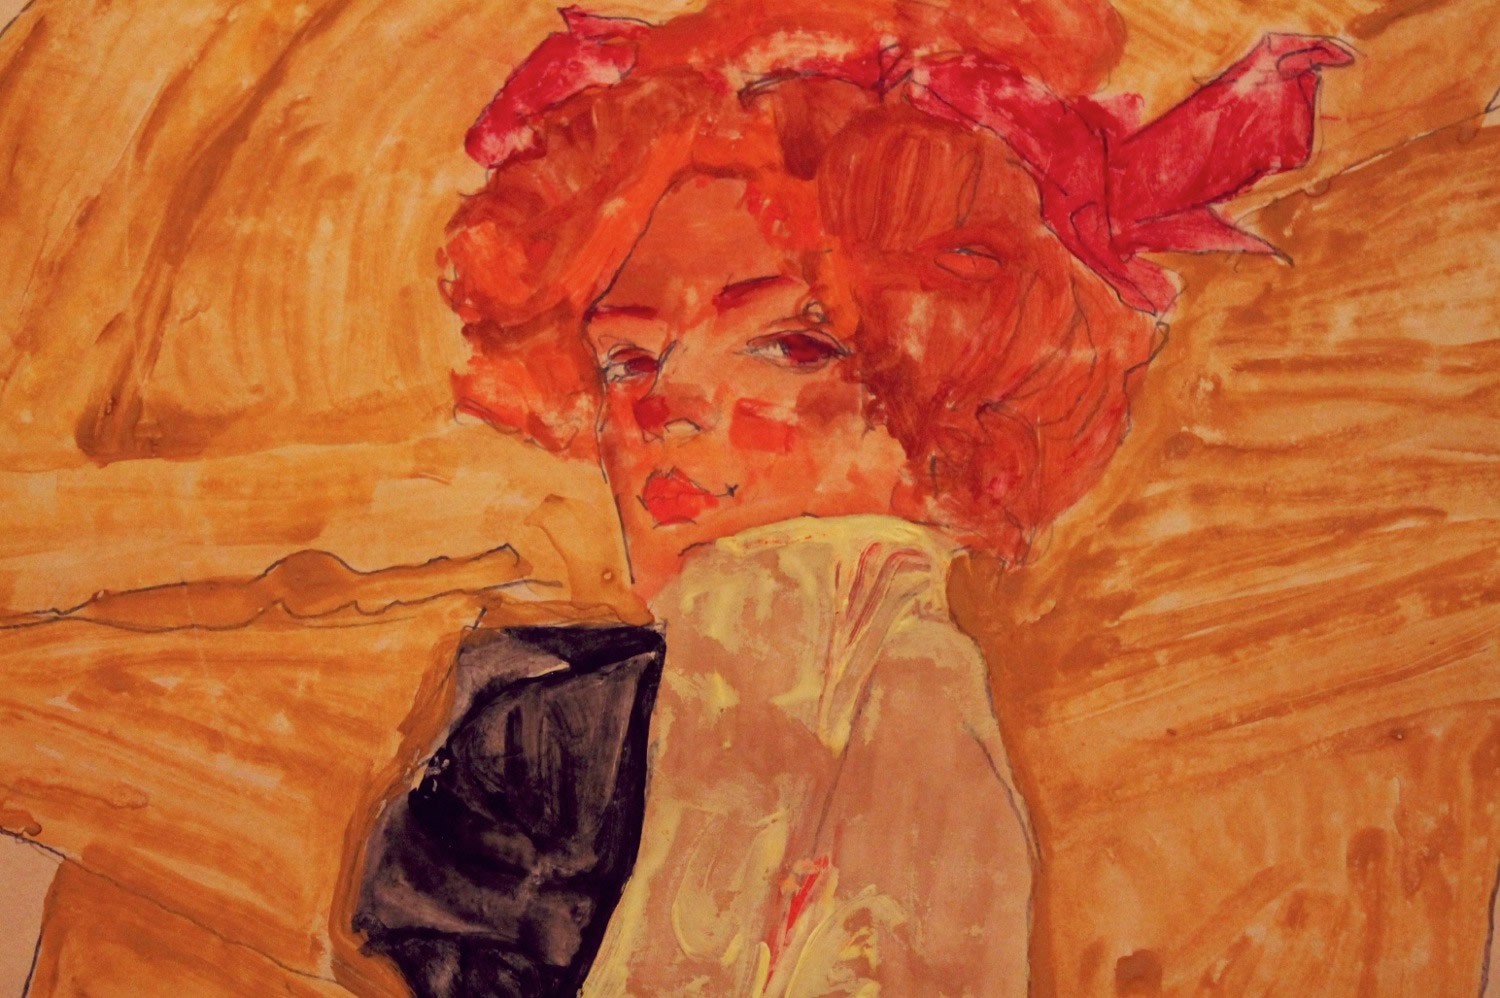 Egon Schiele - "Gerti vor ockerfarbener Draperie" - 1910